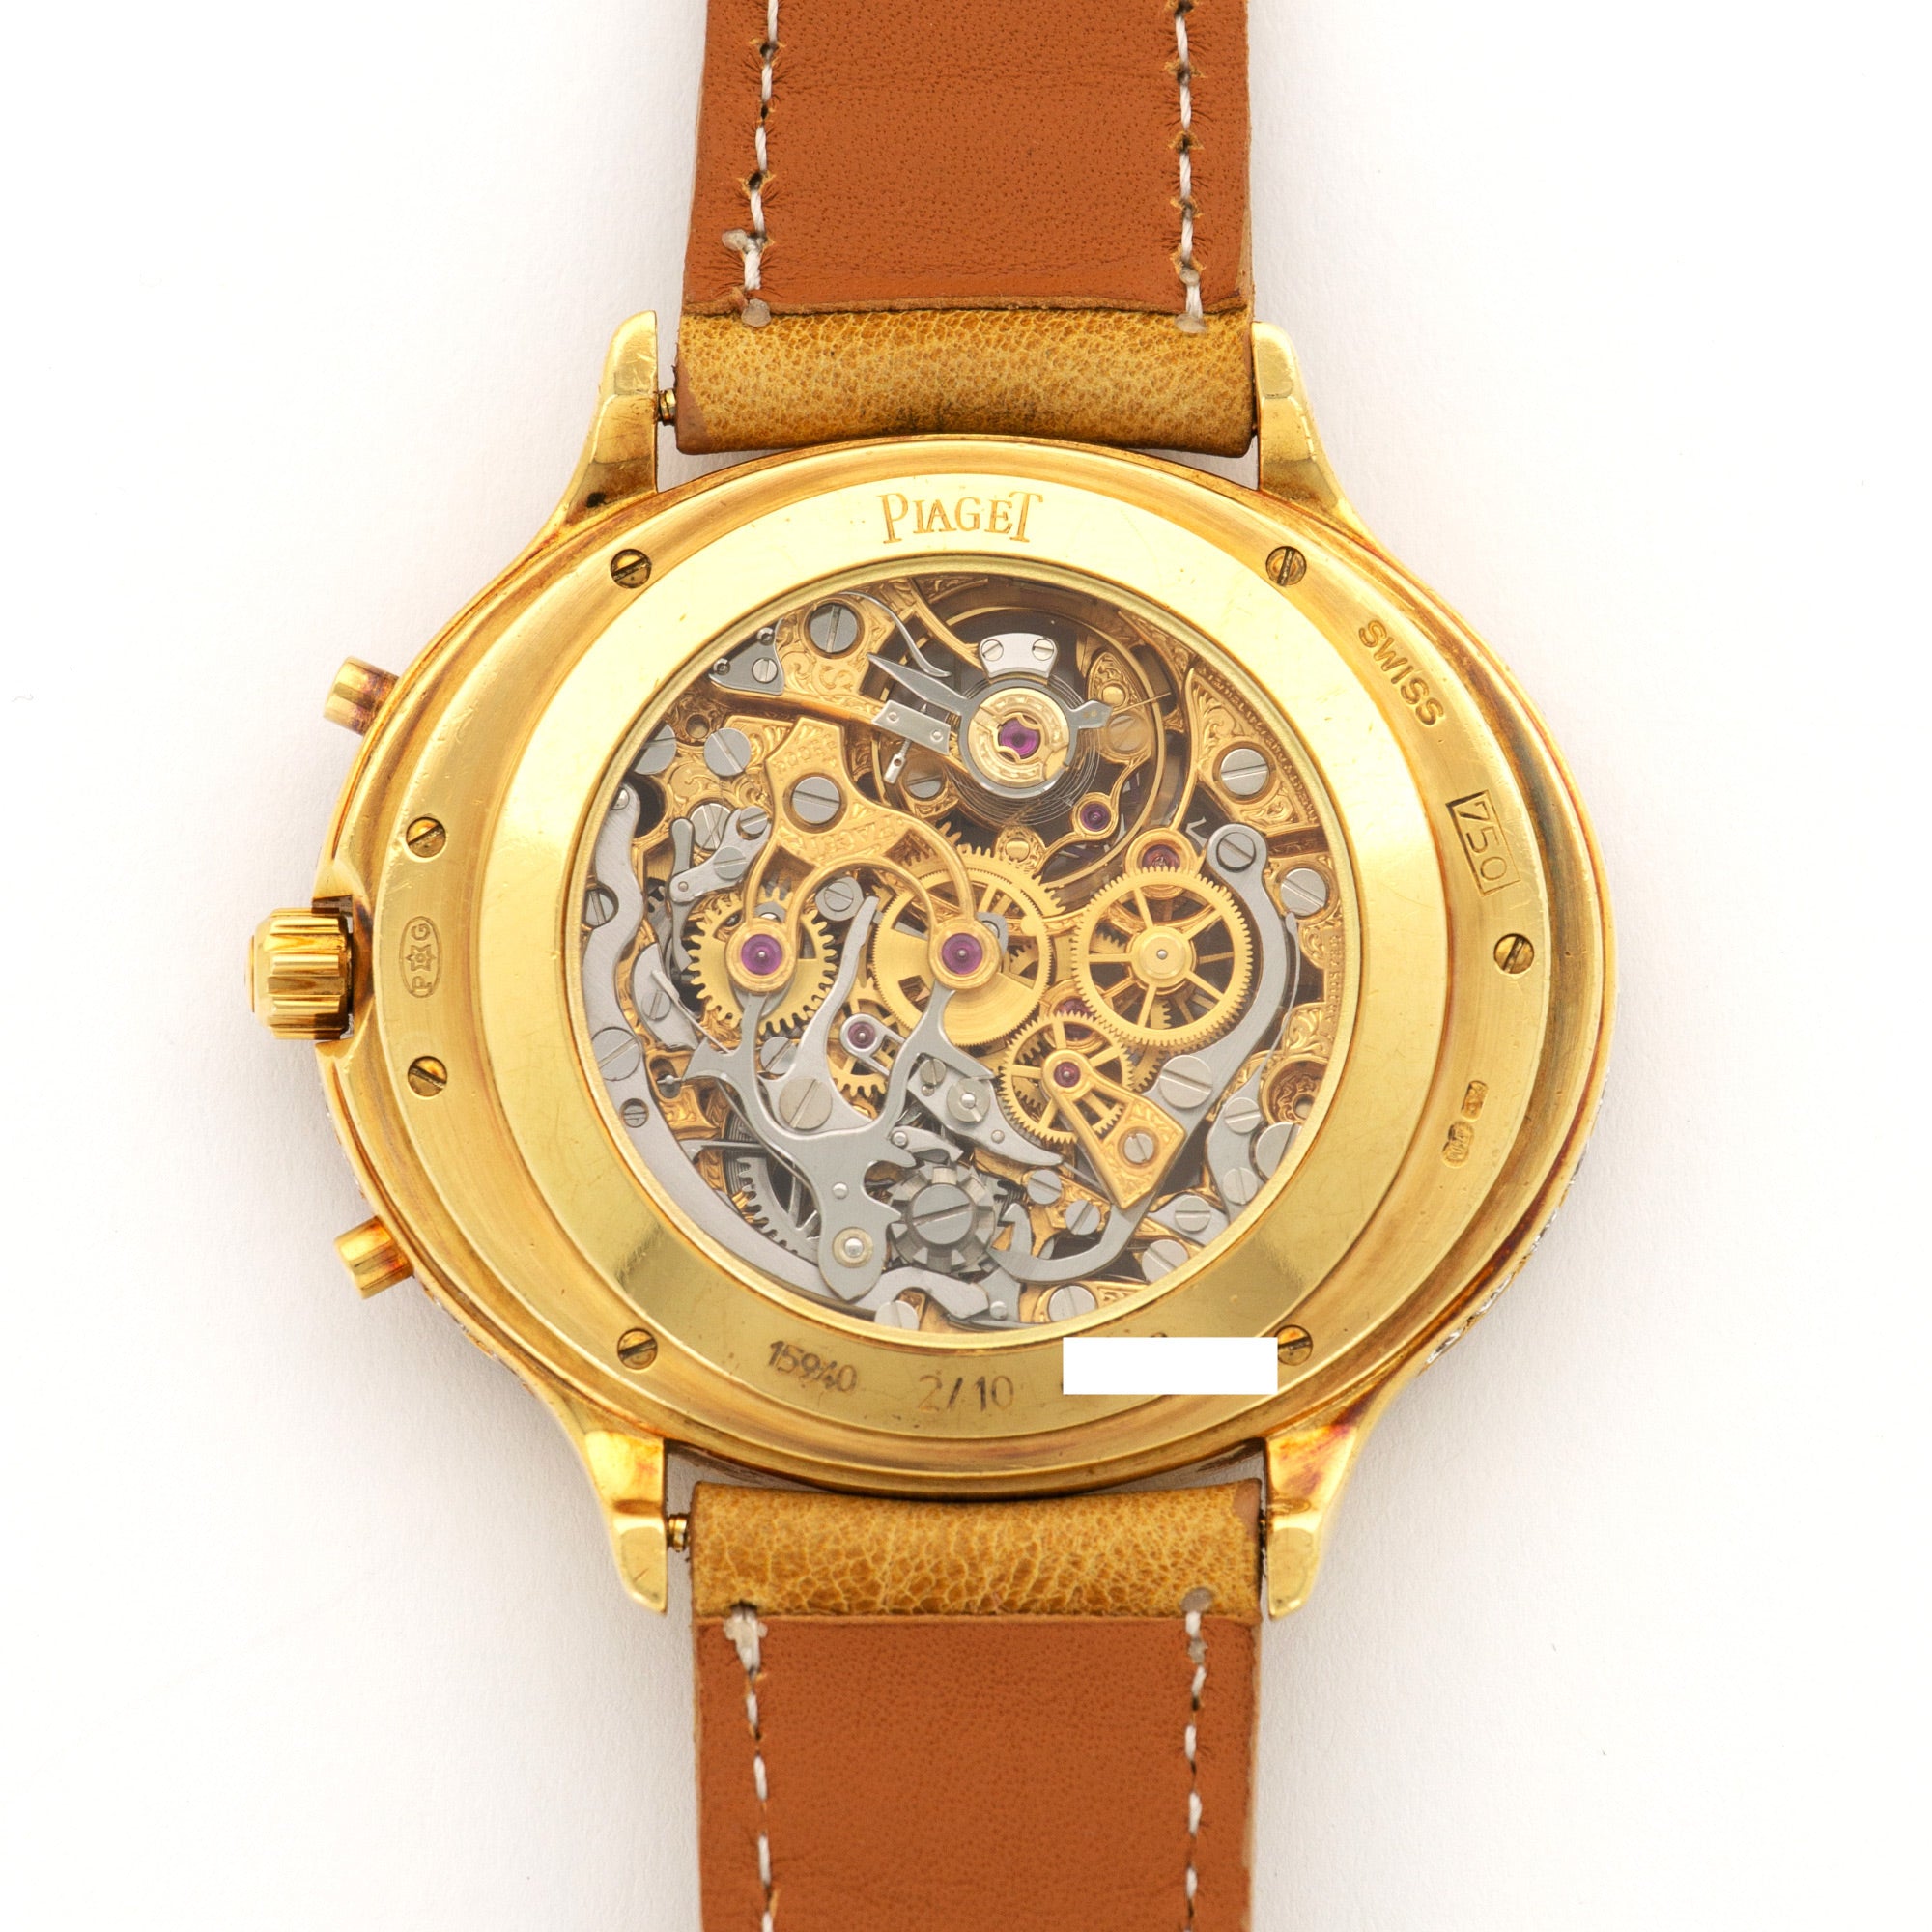 Piaget - Piaget Yellow Gold Skeletonized Lapis Lazuli Chronograph Watch - The Keystone Watches